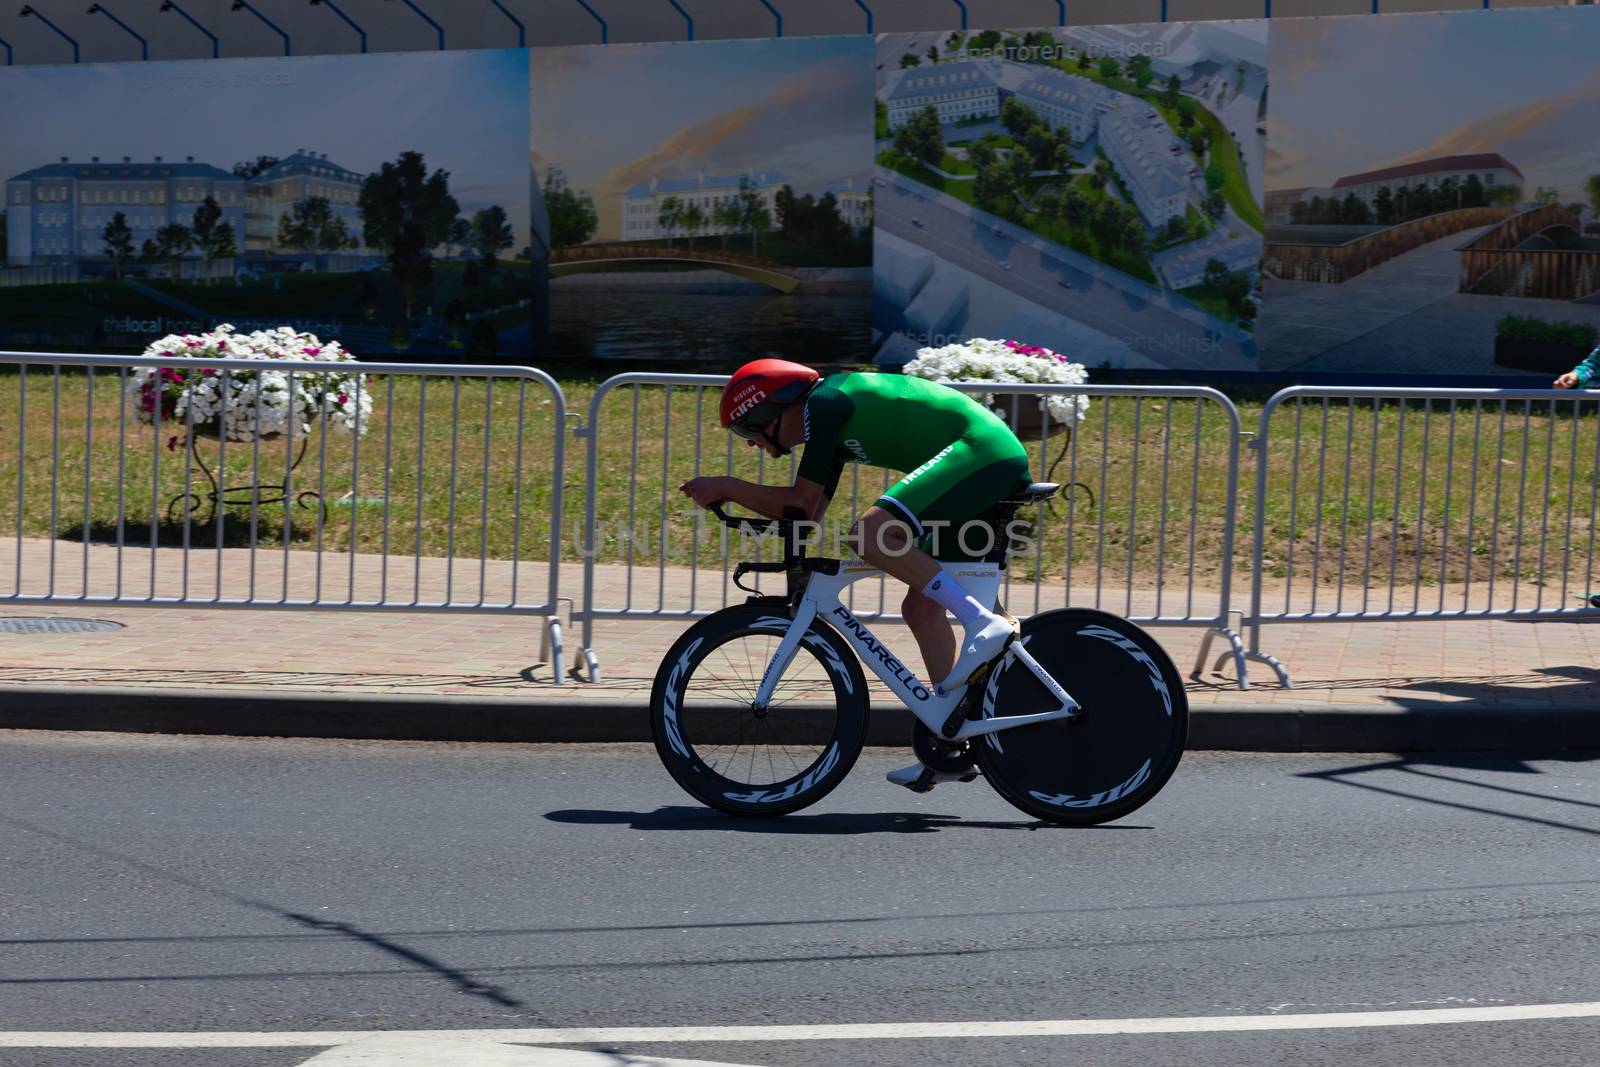 MINSK, BELARUS - JUNE 25, 2019: Cyclist from Ireland O'loughlin on Pinarello bike participates in Men Split Start Individual Race at the 2nd European Games event June 25, 2019 in Minsk, Belarus